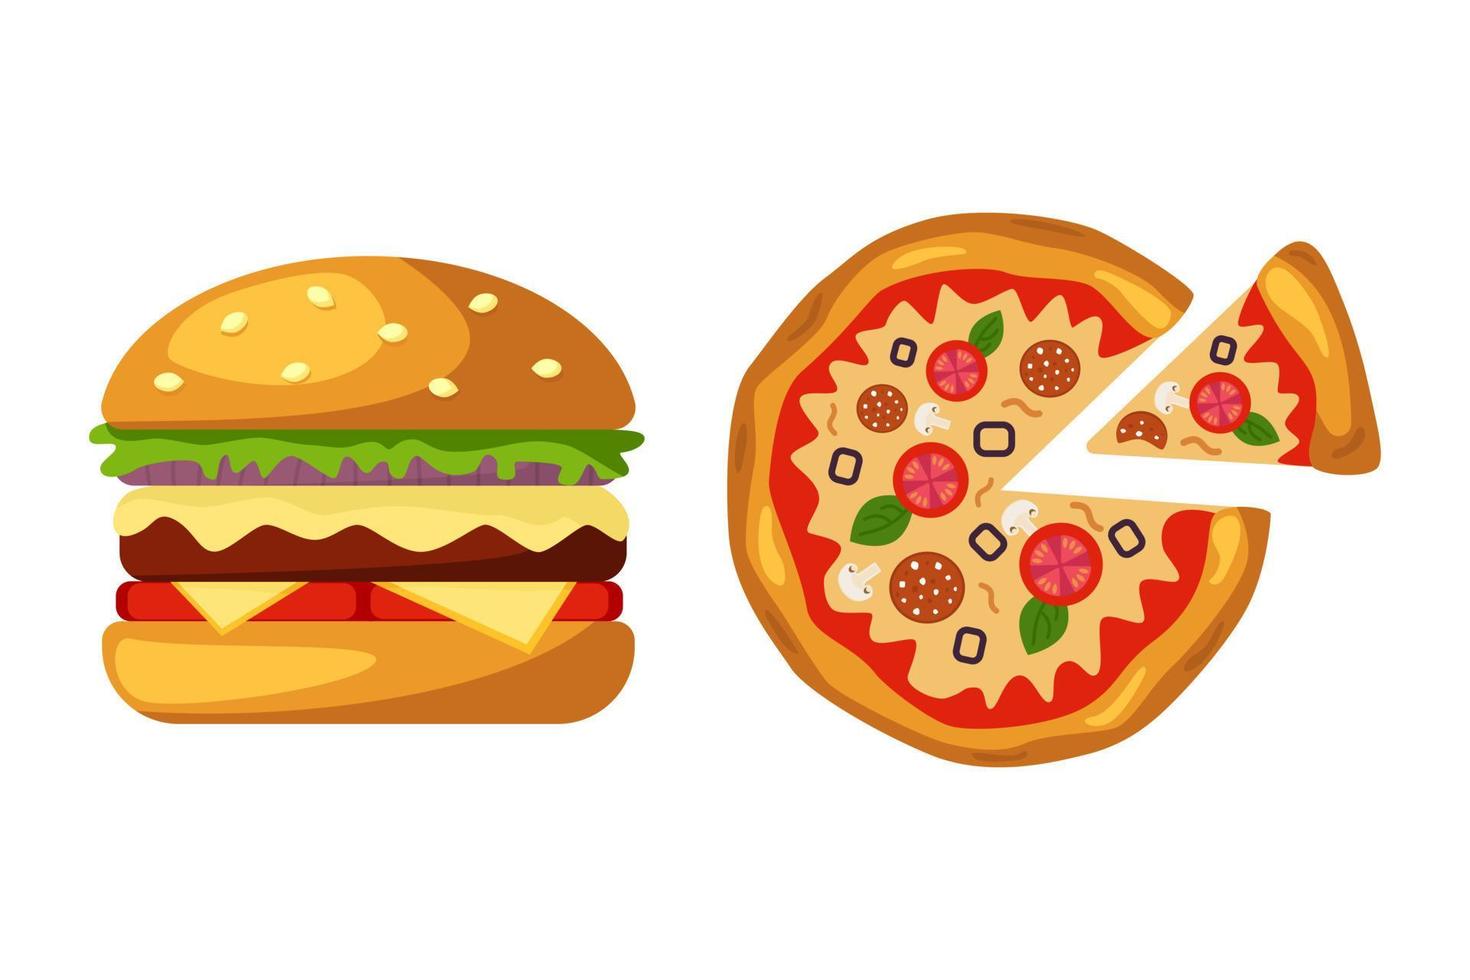 pizza med skiva, med tomater, oliver, korv, ost. hamburgare ikon med ost, sallad, sesambulle. hamburgare, cheeseburgare, pizza, snabb gatumat koncept vektor